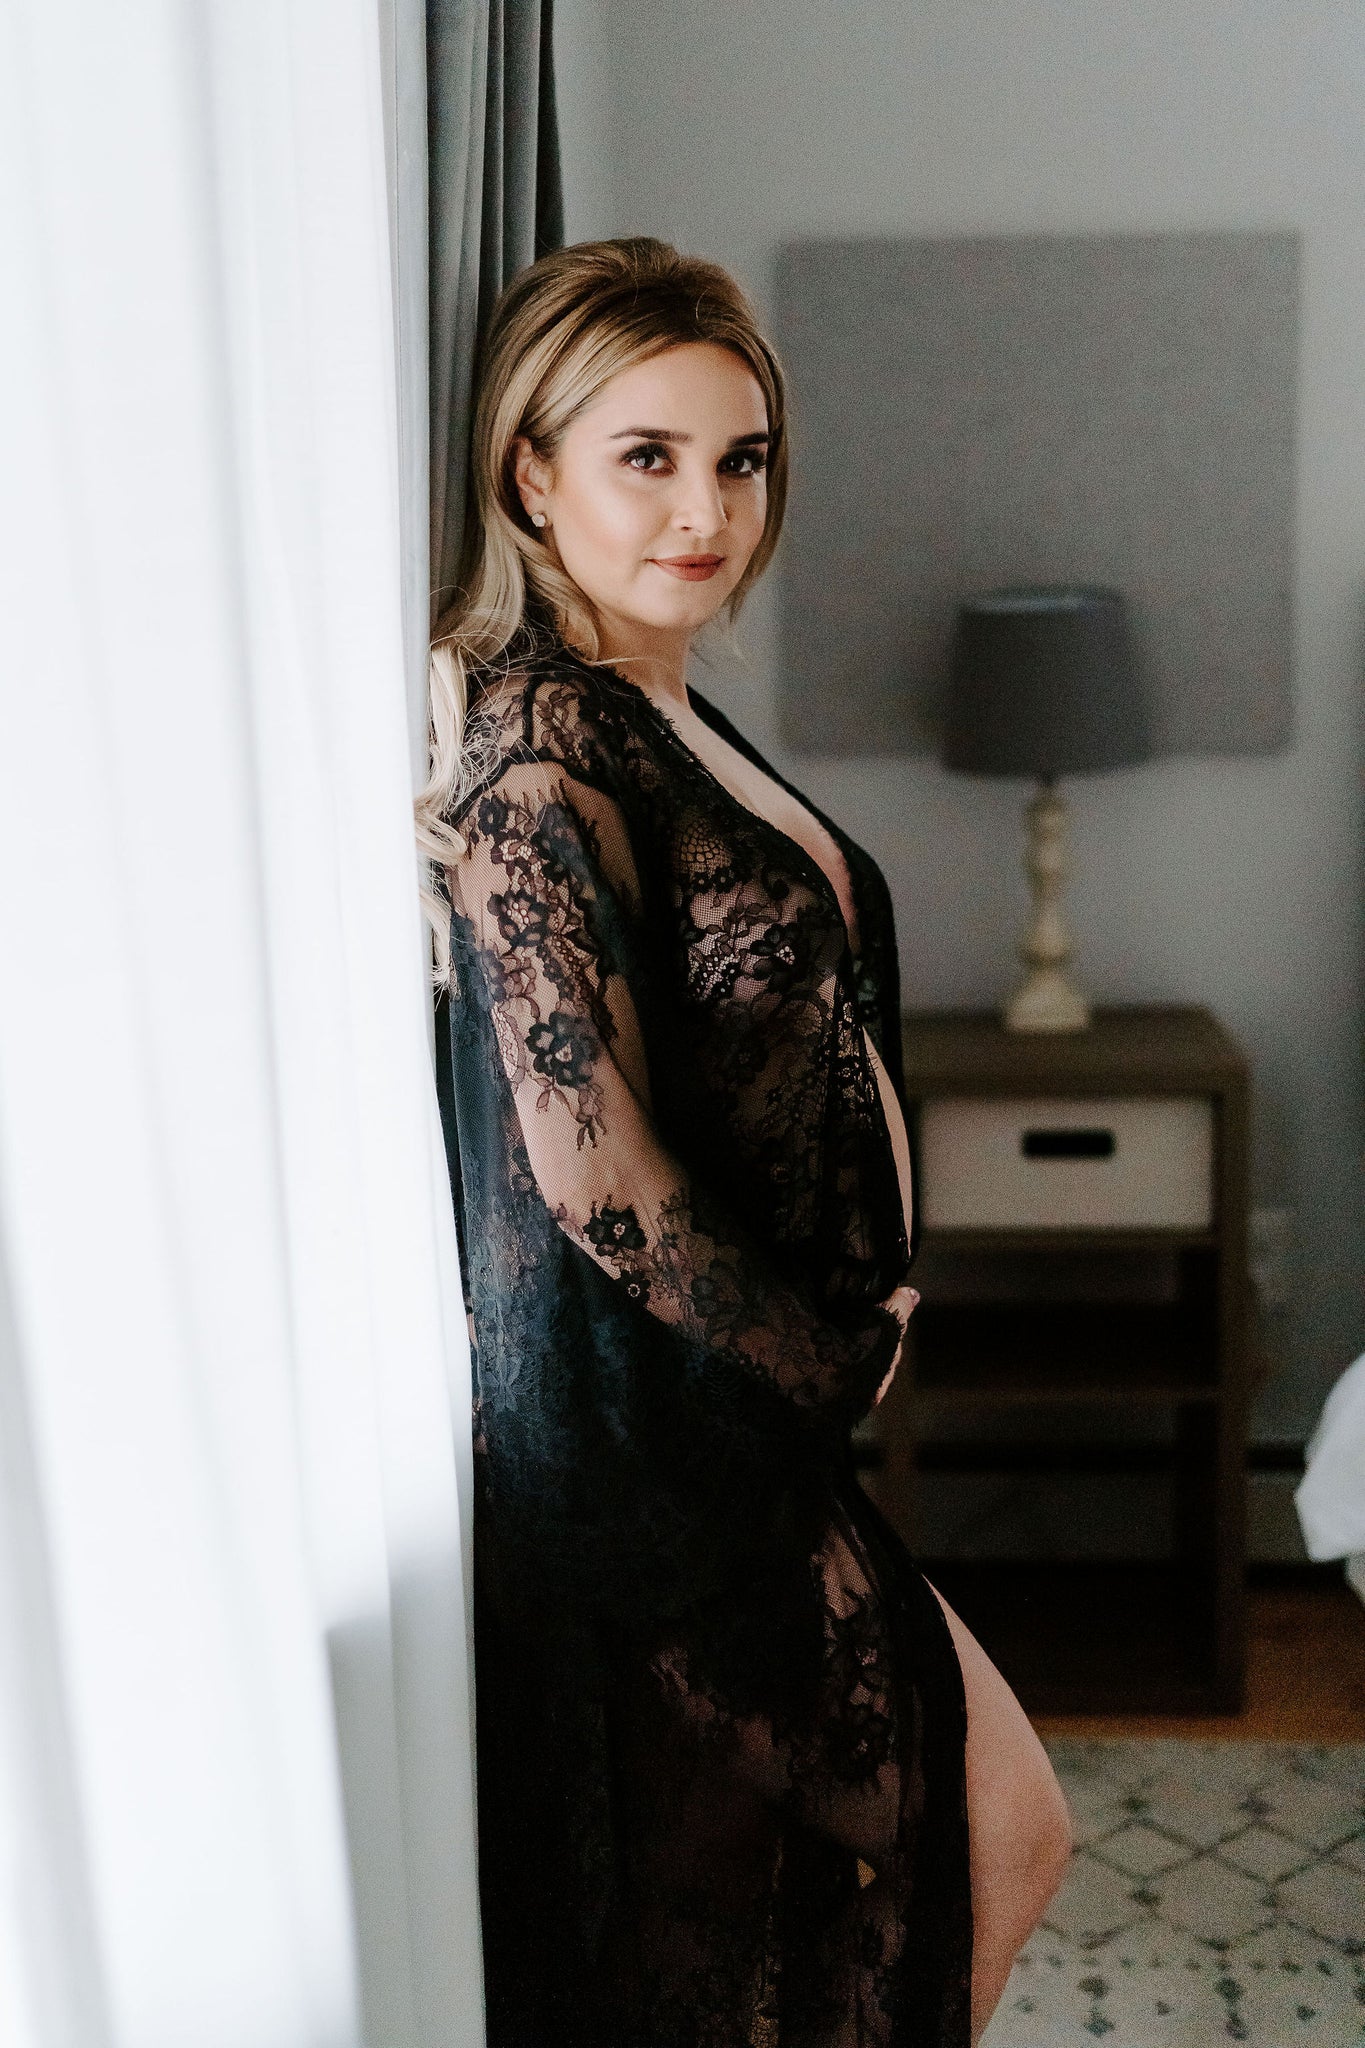 Pregnant model wearing black lace robe